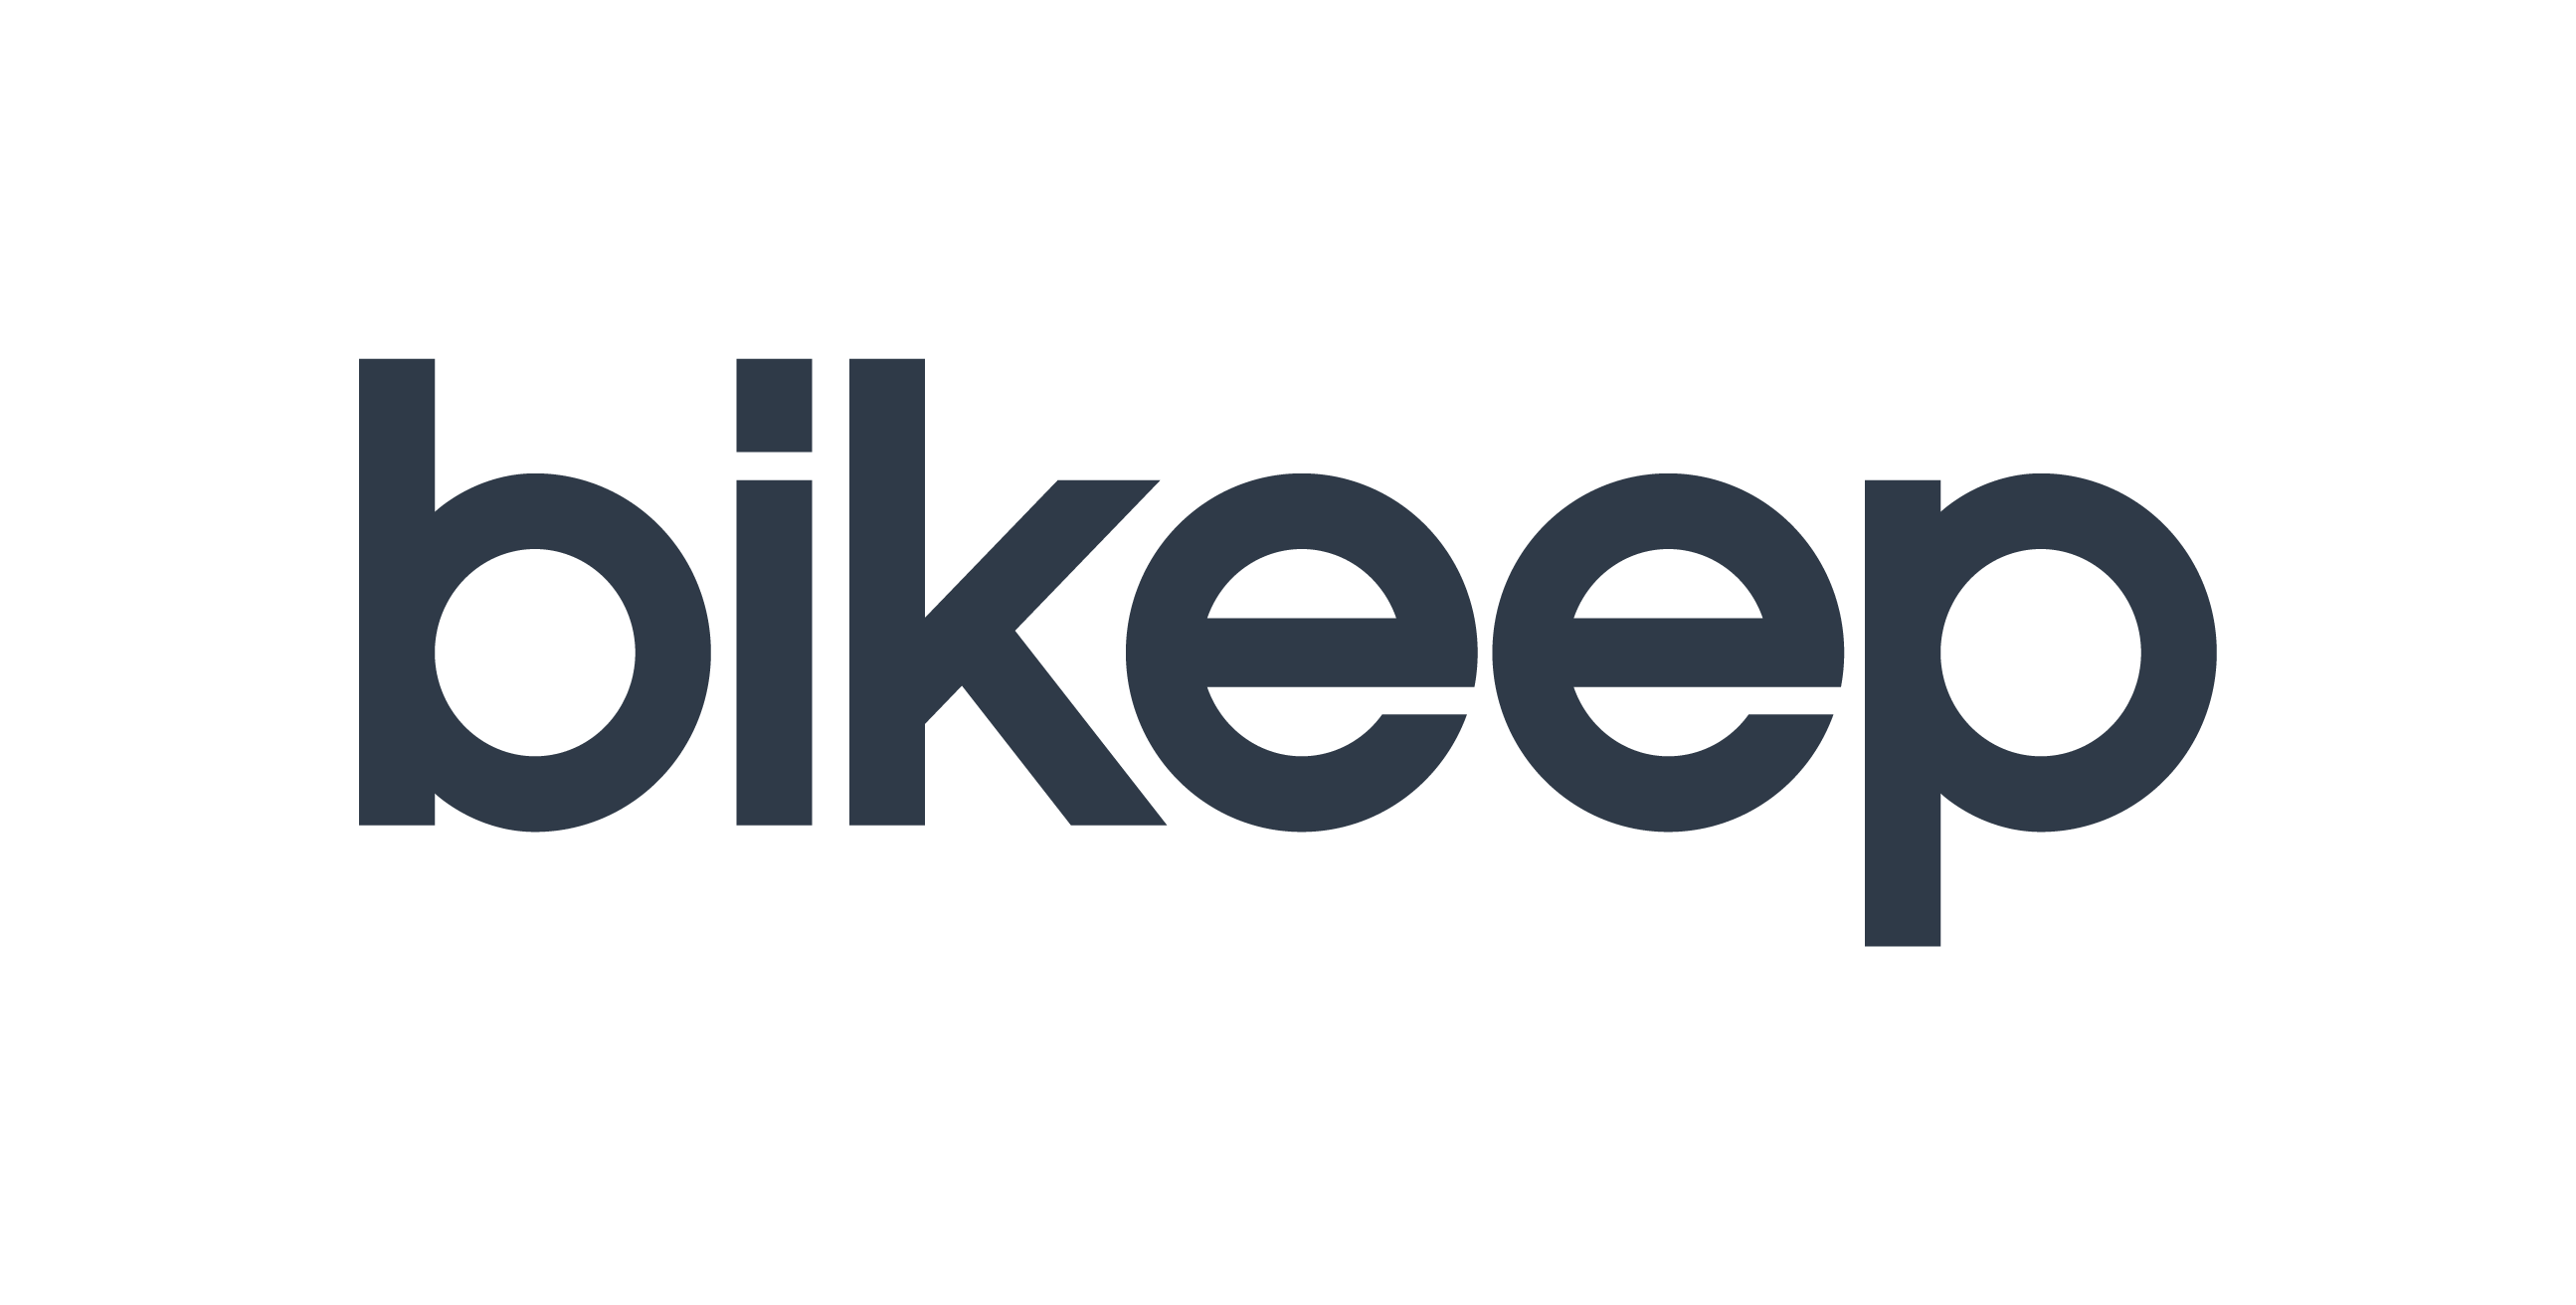 Bikeep: Parking as simple as riding a bike